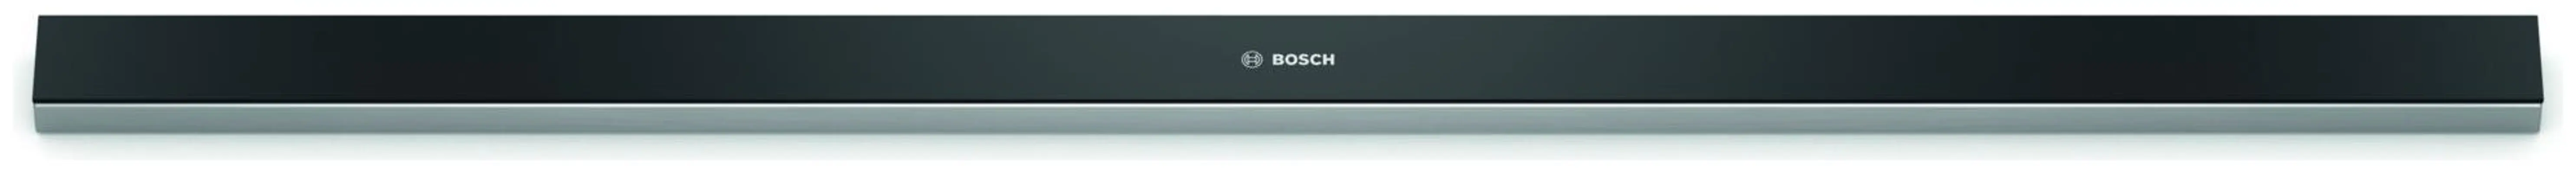 DSZ4986-Bosch-Afzuigkap-accessoires